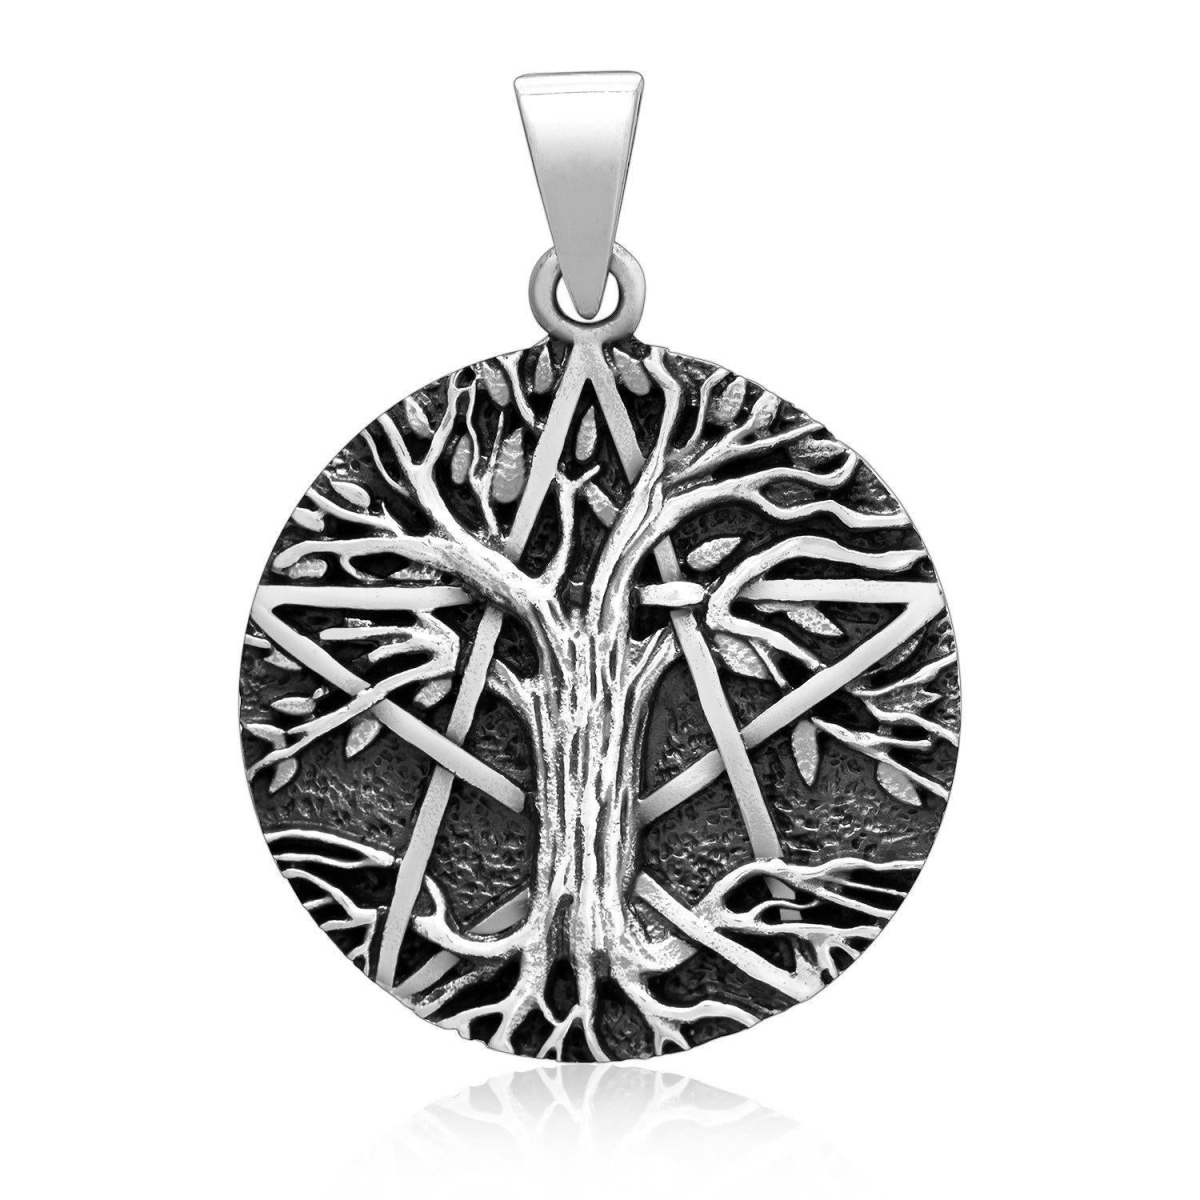 Viking pentagram necklace-NORSECOLLECTION- Viking Jewelry,Viking Necklace,Viking Bracelet,Viking Rings,Viking Mugs,Viking Accessories,Viking Crafts